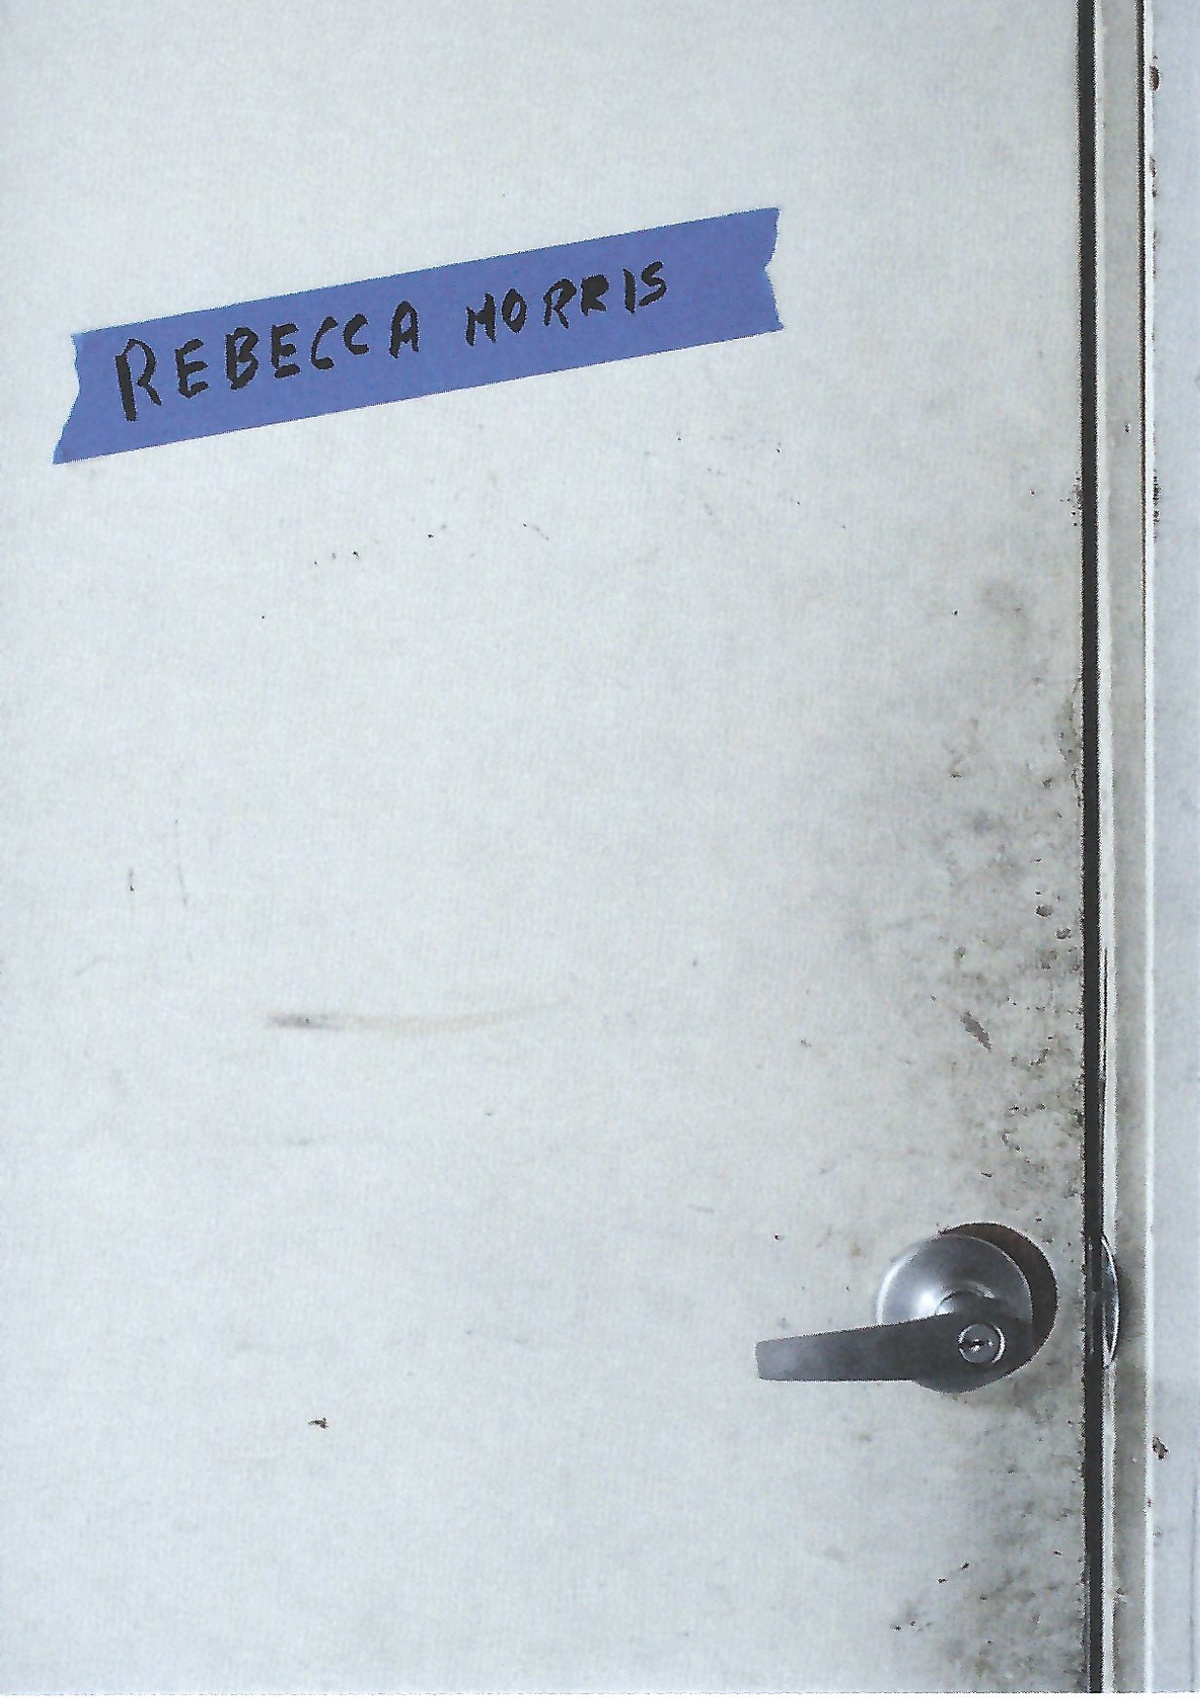 Rebecca Morris: #18. August 24 – October 5, 2013